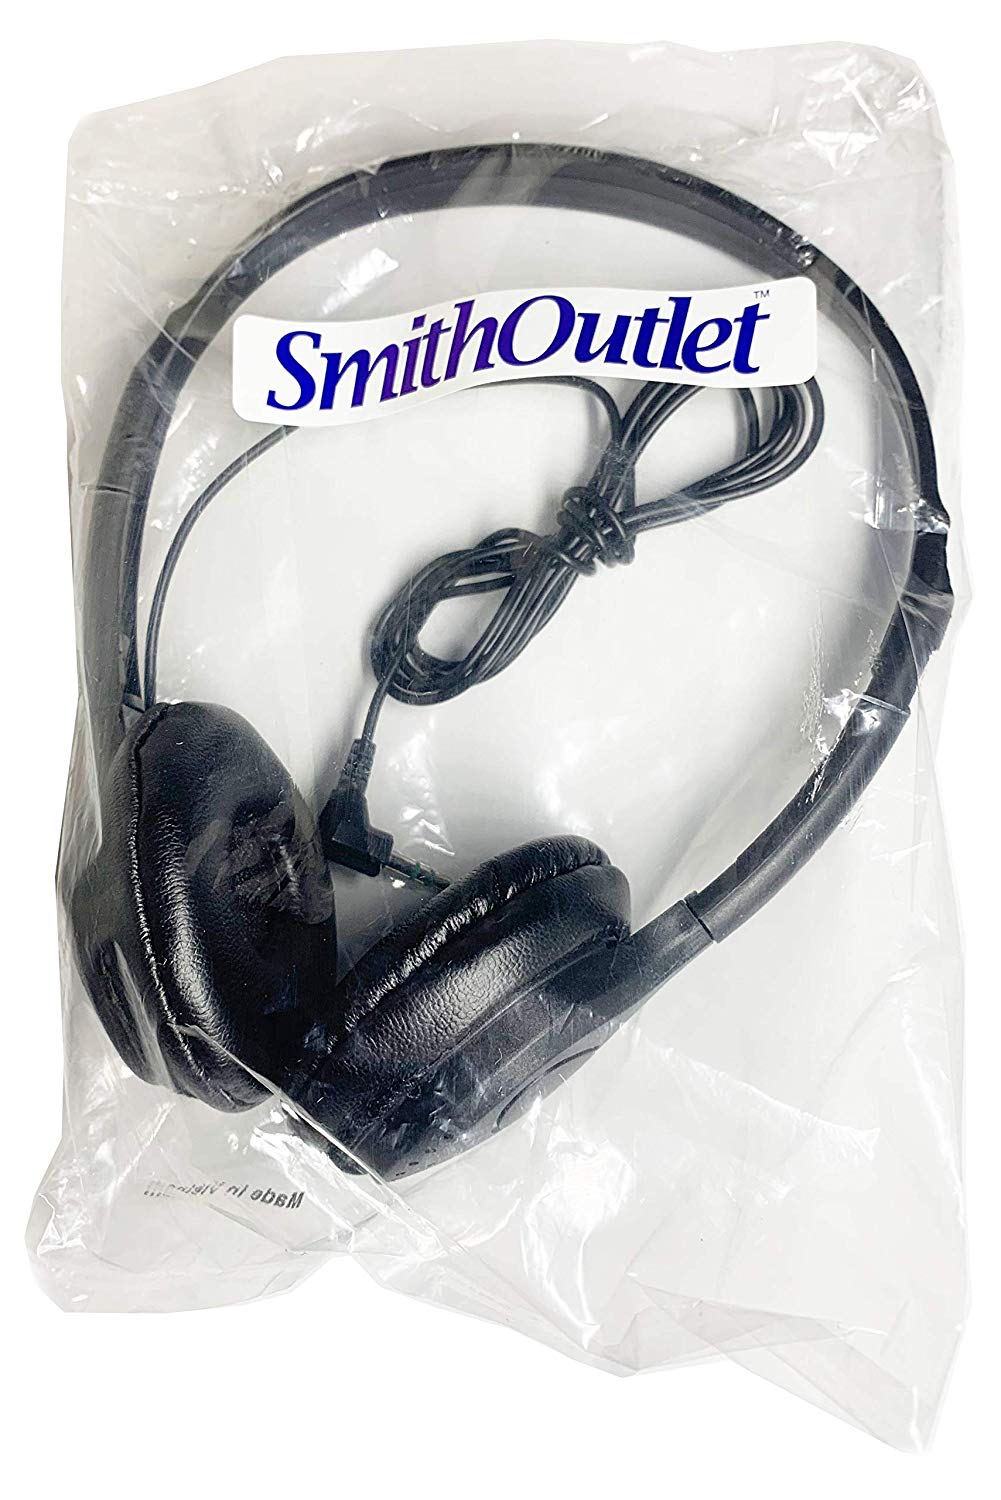 Individually Packaged SmithOutlet Bulk Headphones